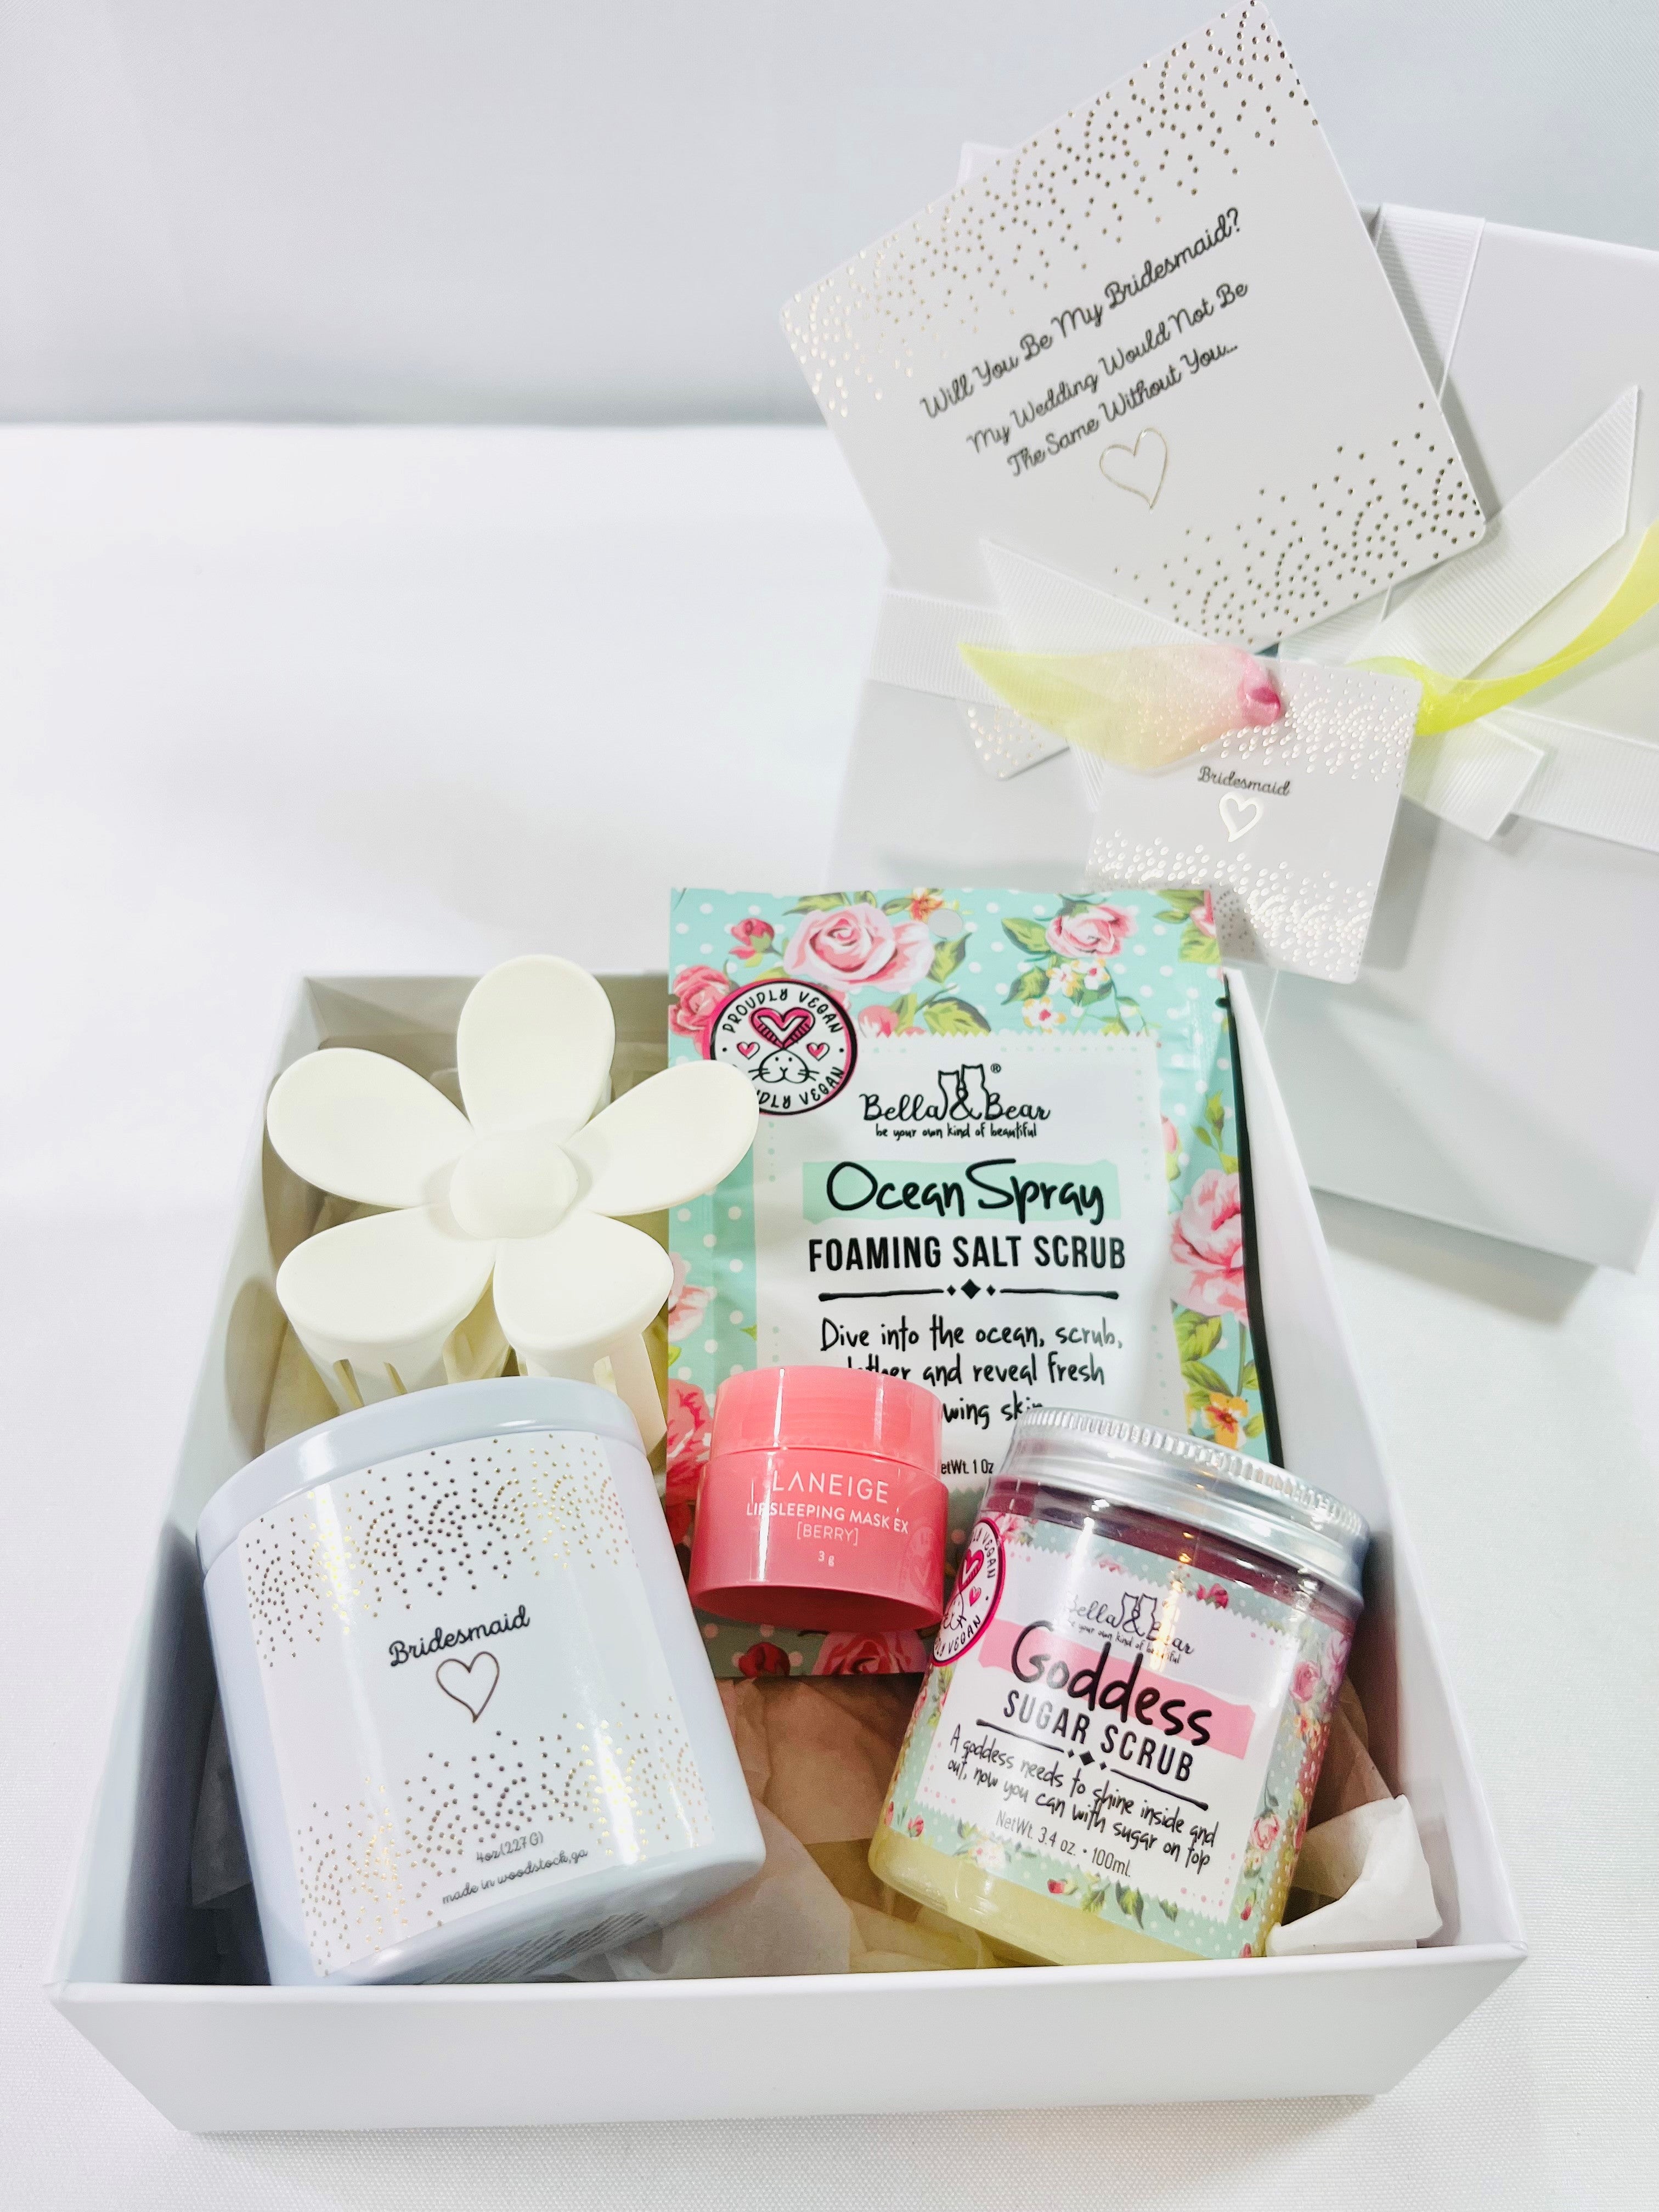 Bridesmaid Gifts - Bridesmaid Proposal Box Set from Brides for Bachelor |  eBay